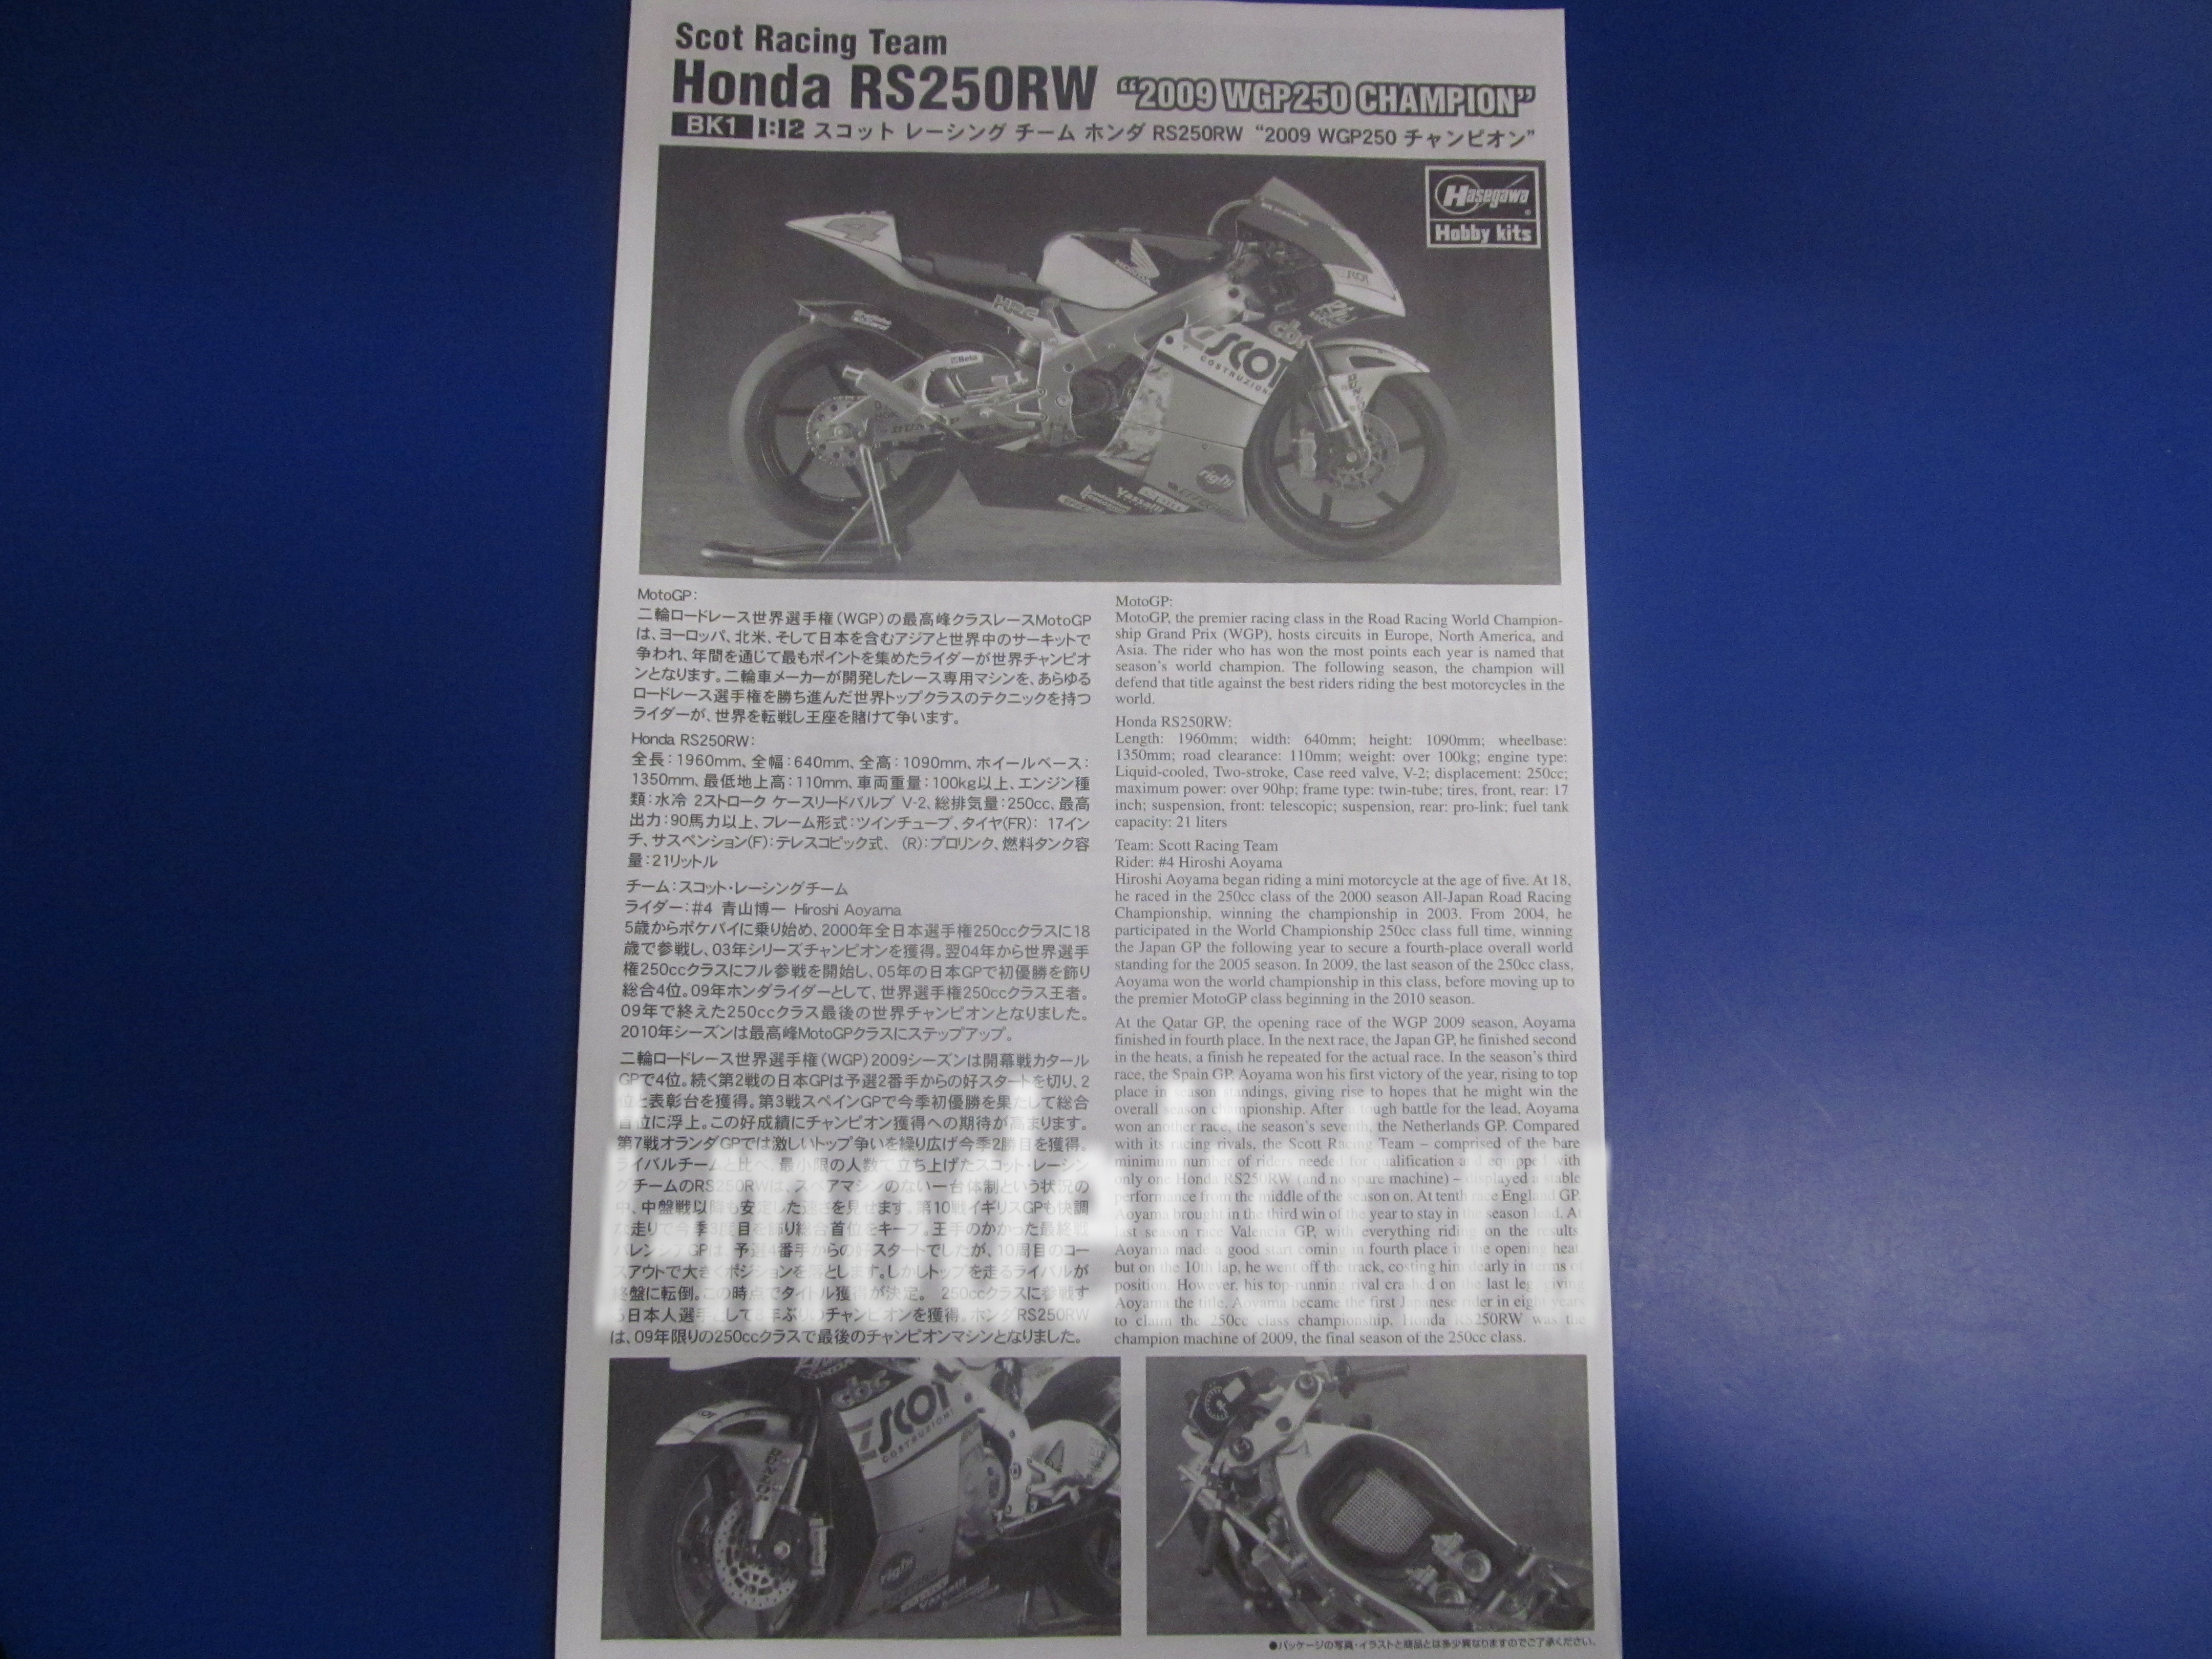 21501 Hasegawa 1/12 Scot Racing Team Honda 250 